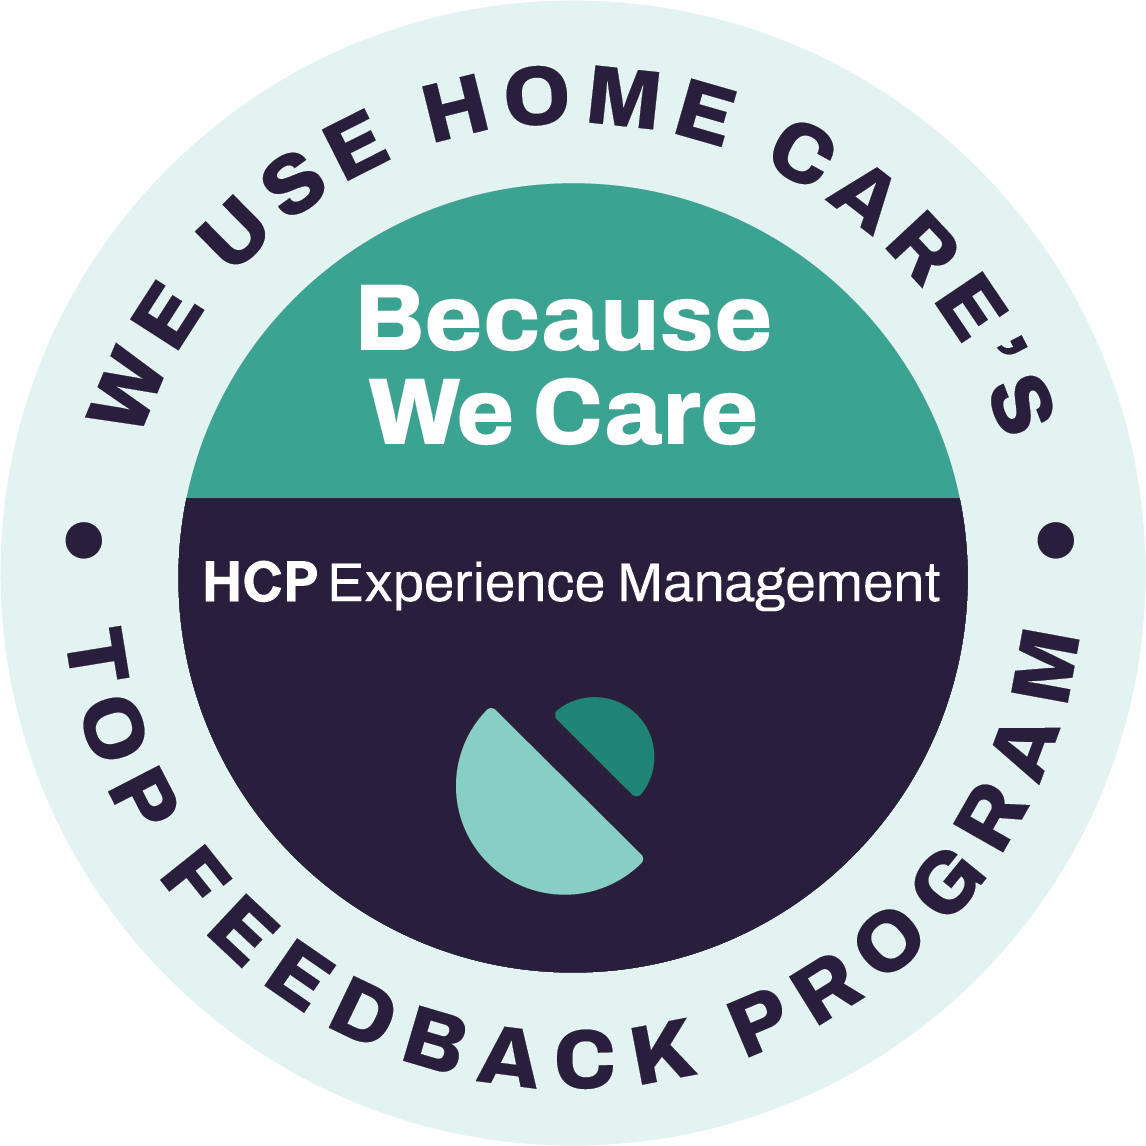 Columbus Hcp experience management program badge.